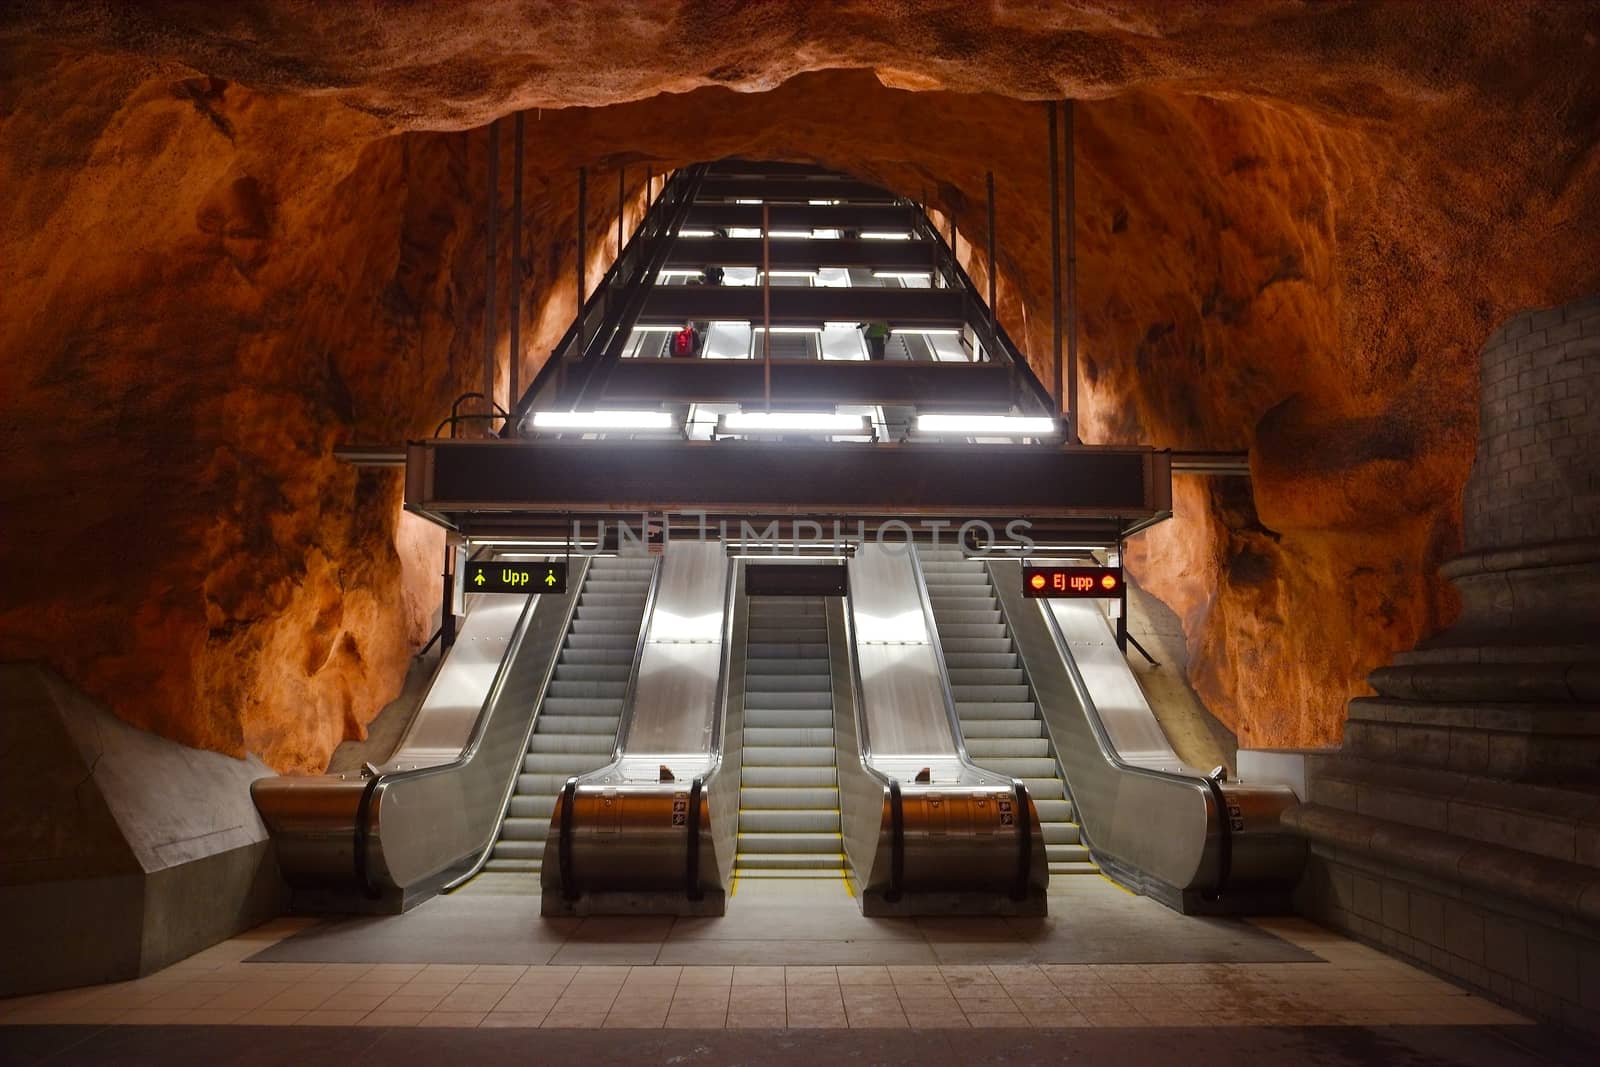 Metro station escalators in Stockholm